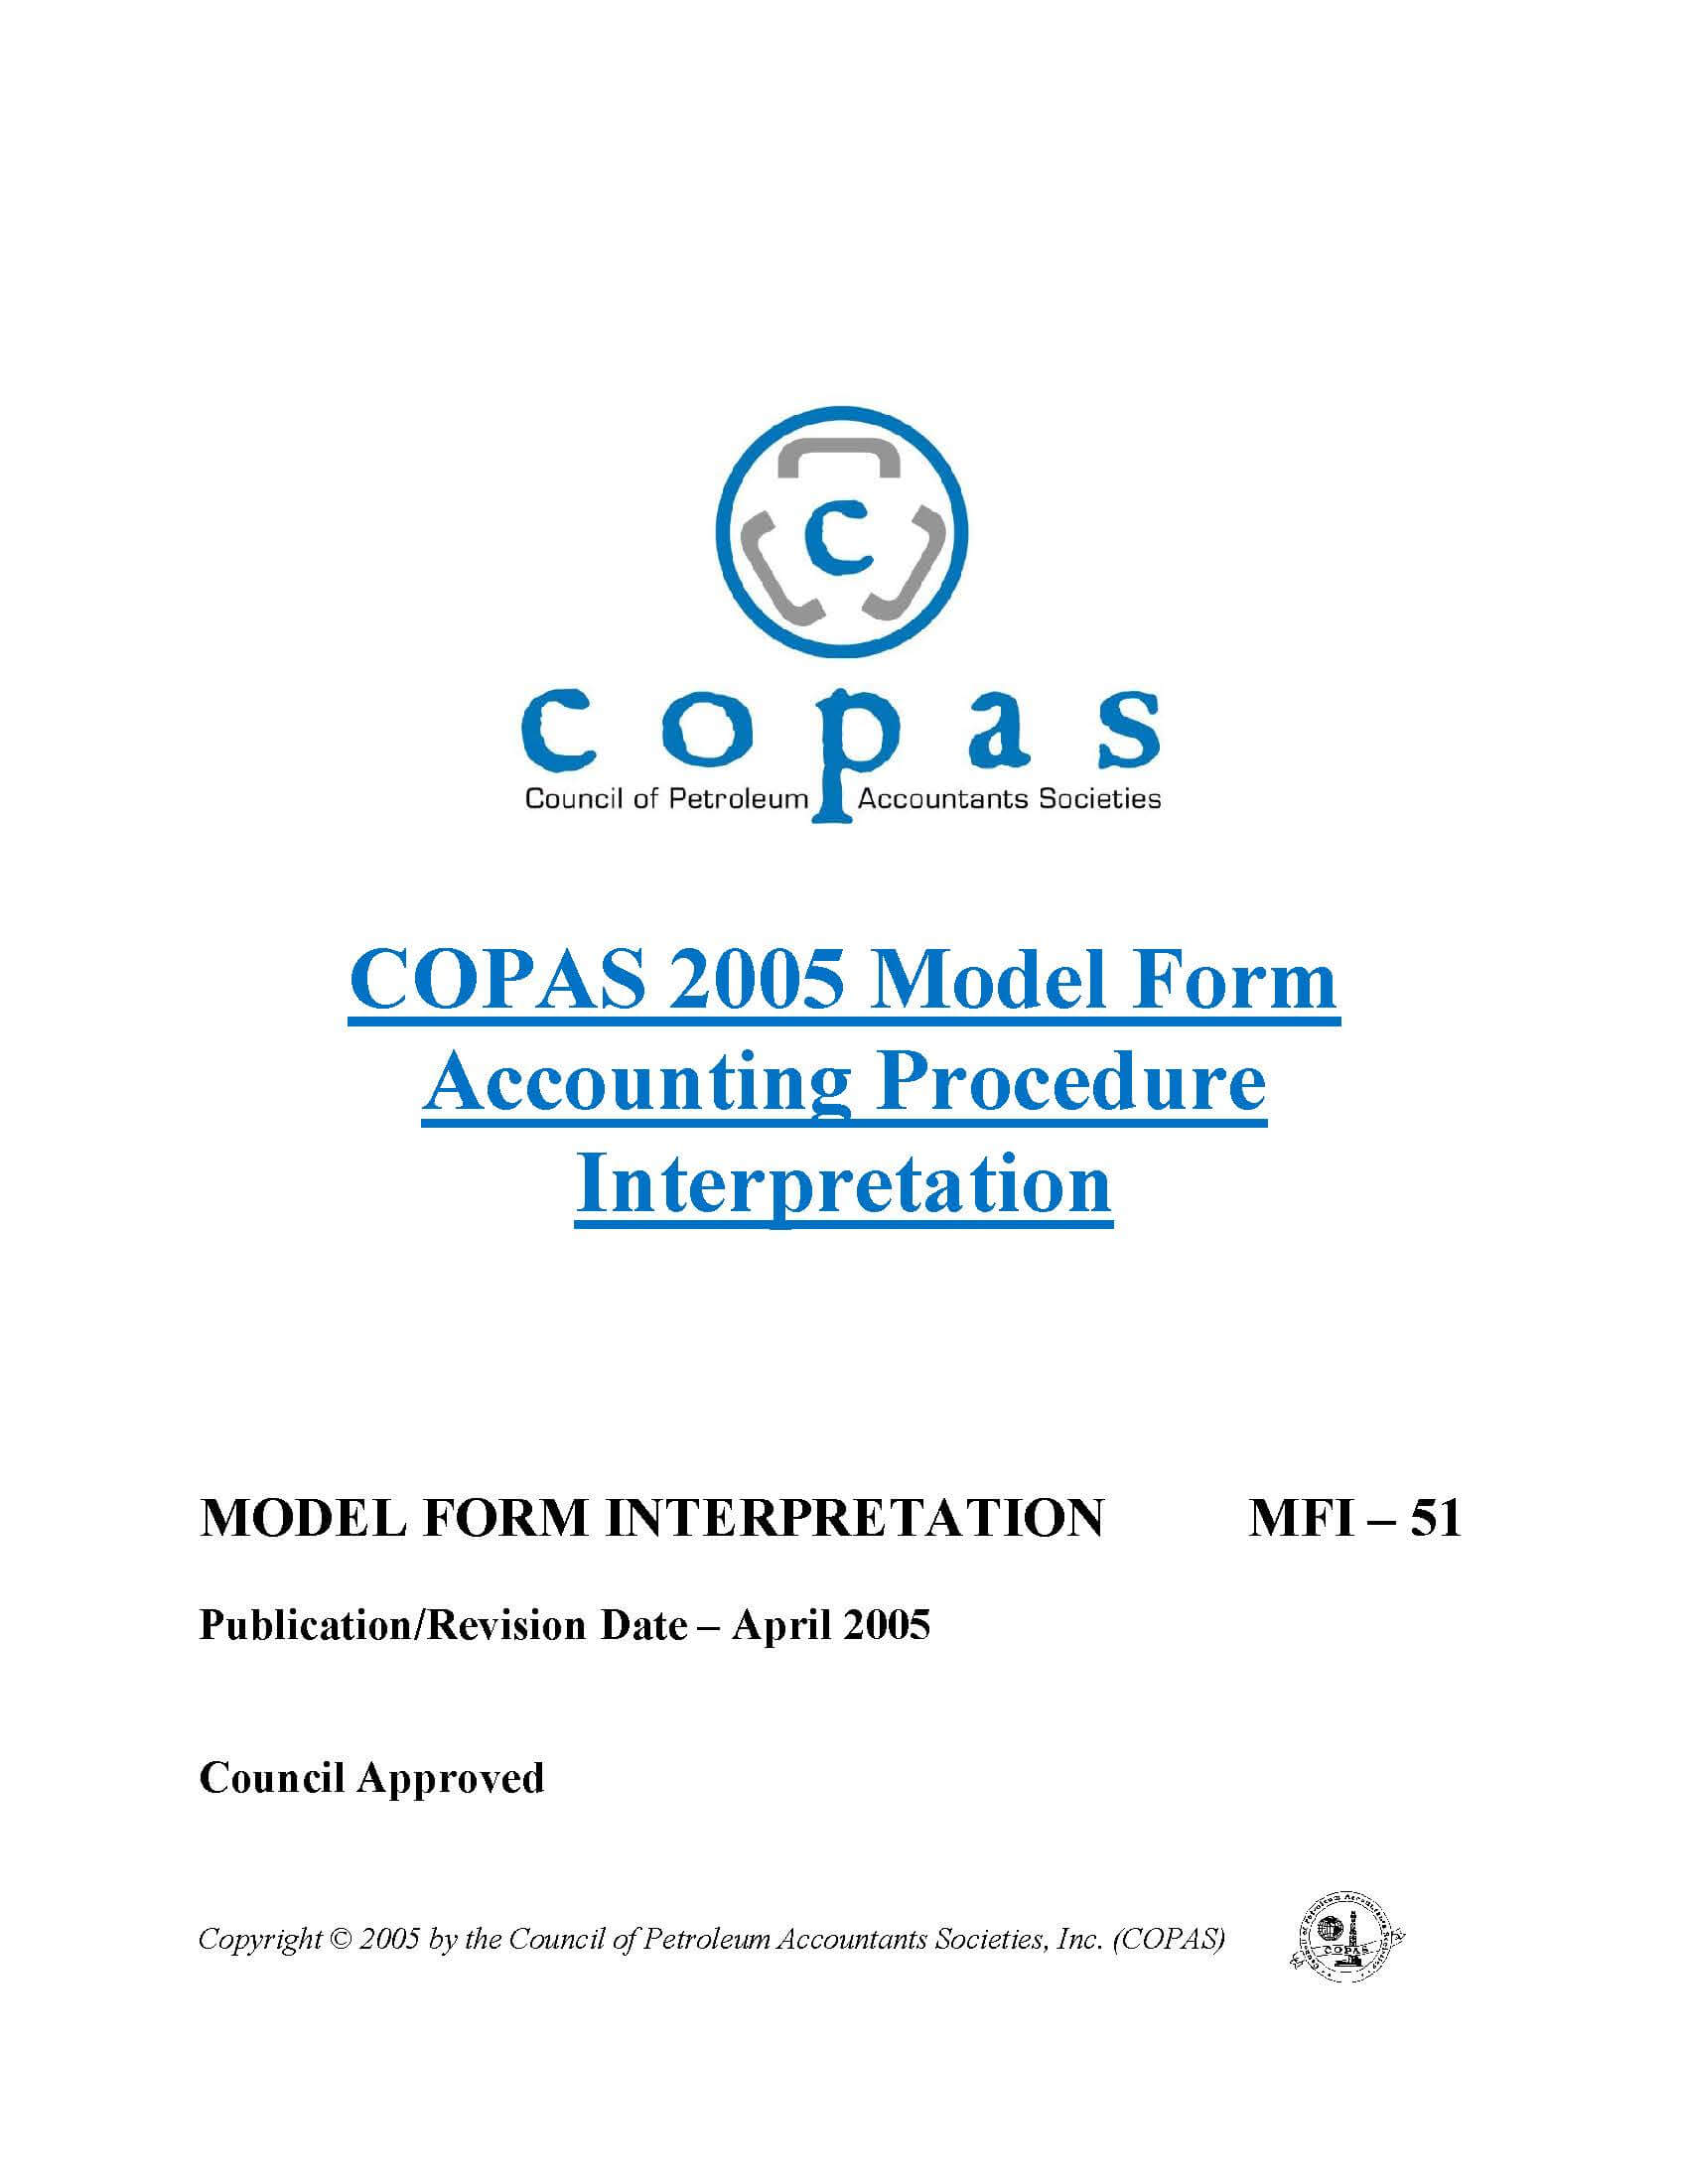 MFI-51 2005 Model Form Accounting Procedure Interpretation